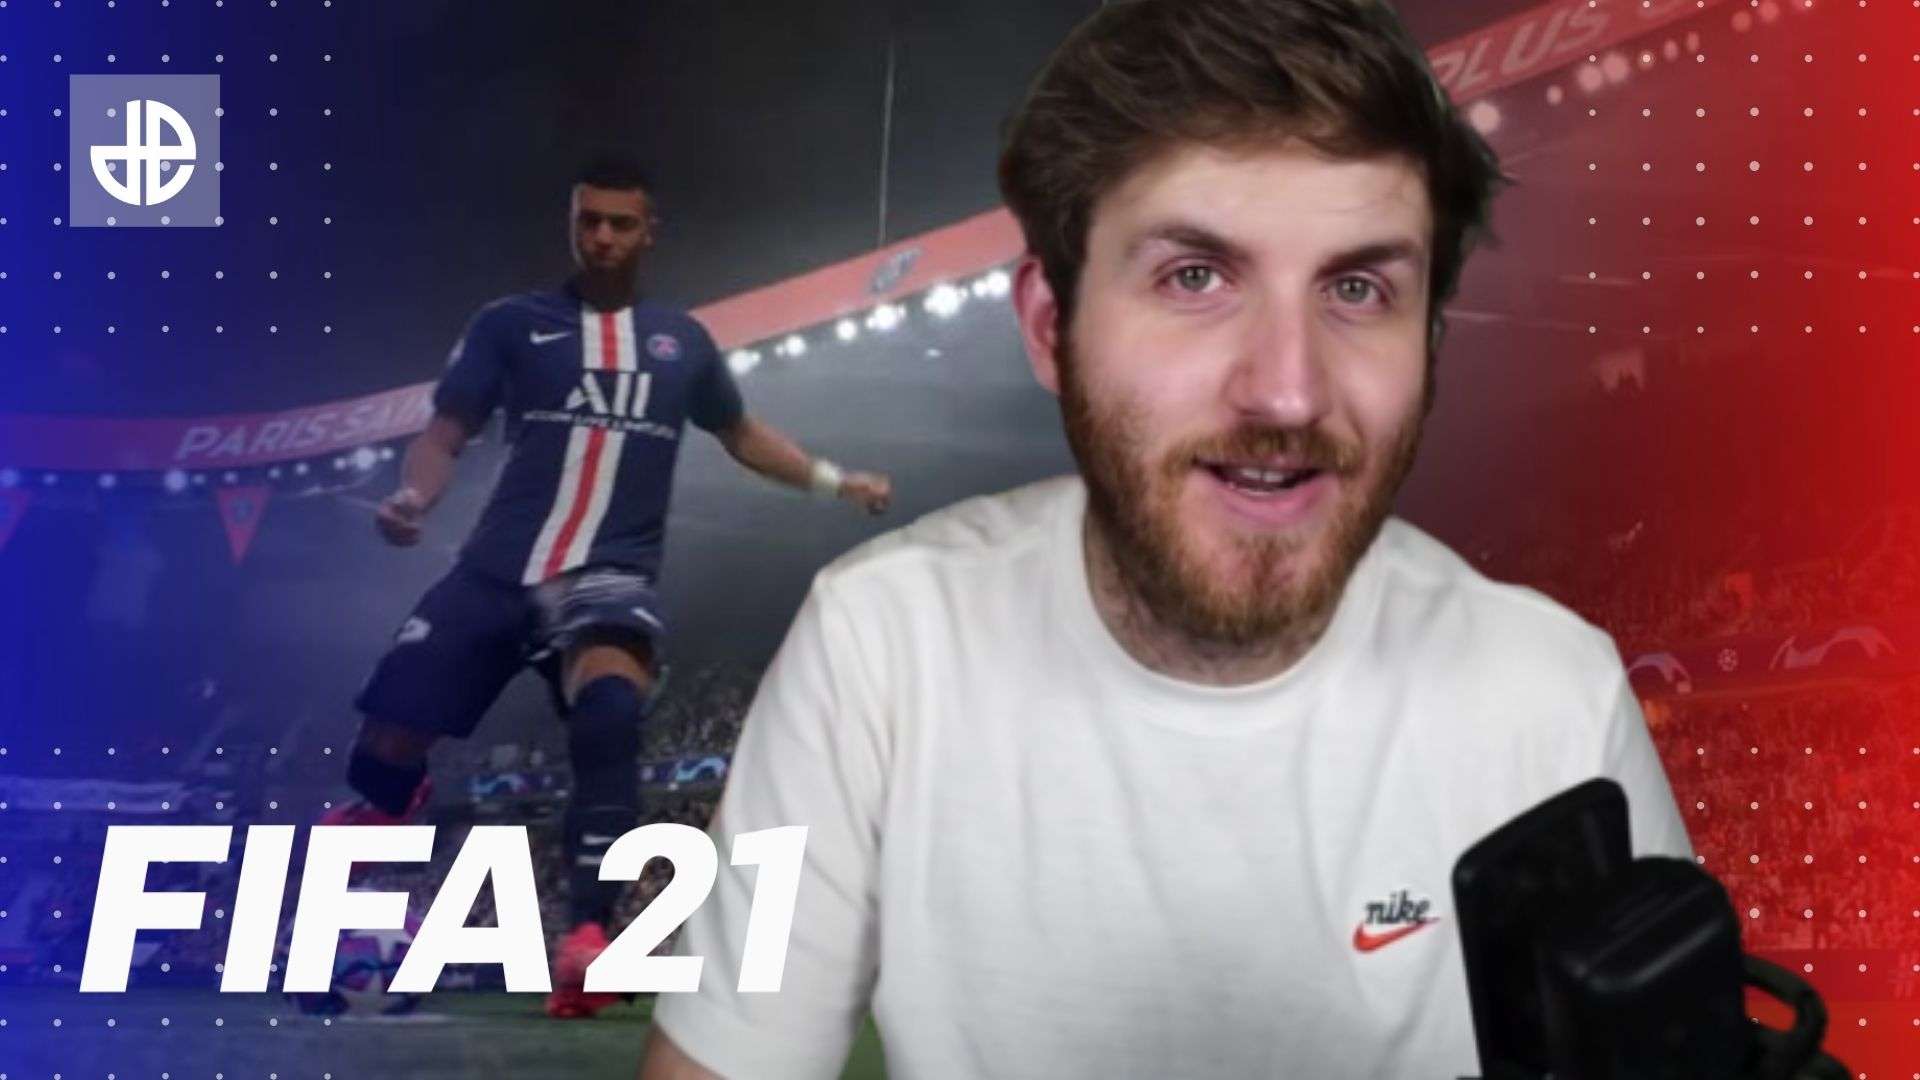 FIFA 21 image with MattHDGamer